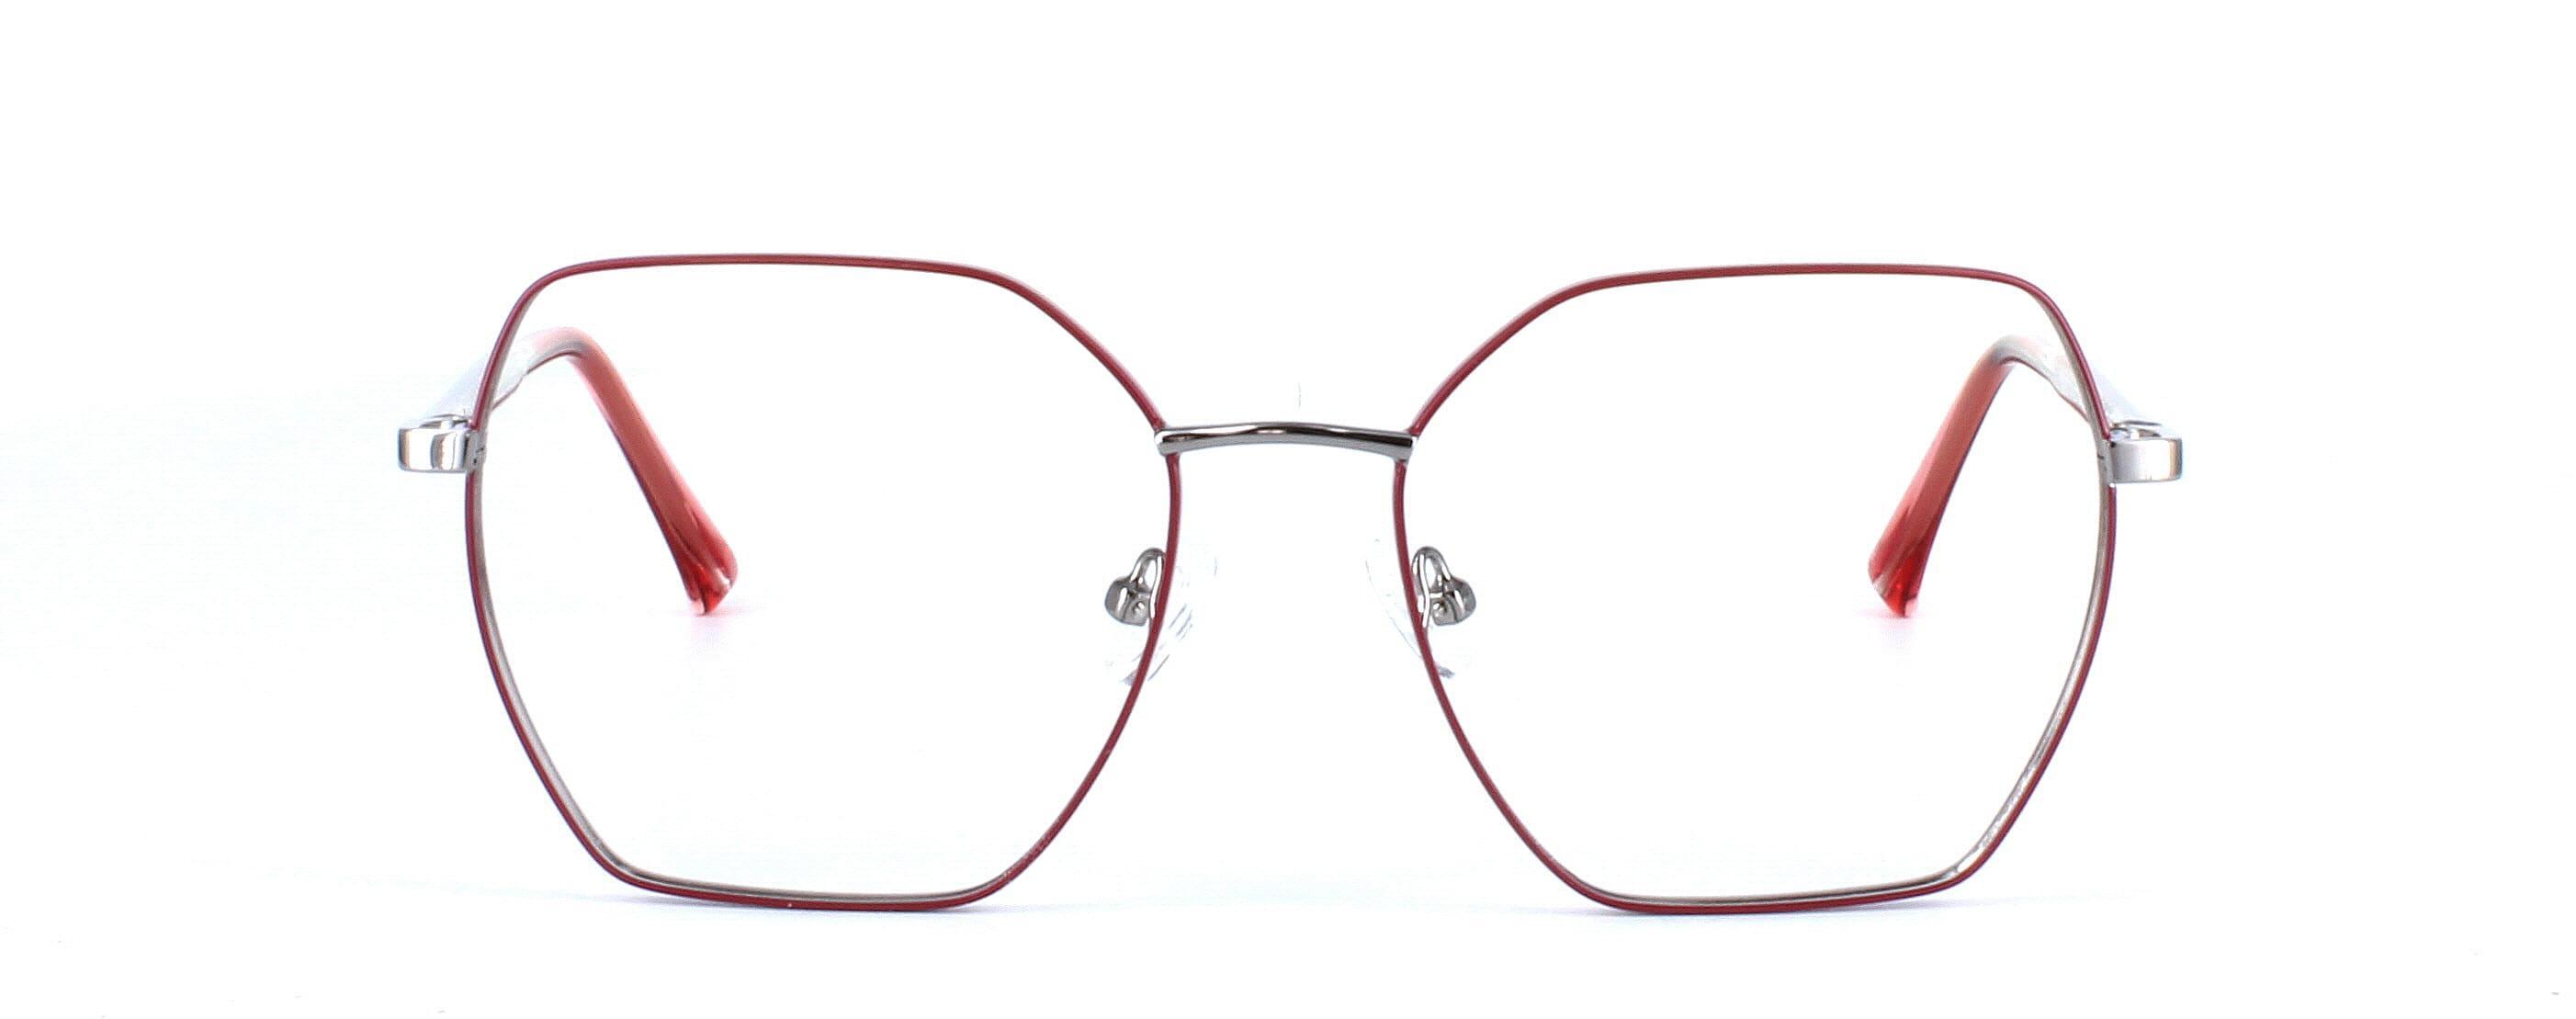 Grus - unisex 2-tone burgundy & silver glasses frame - image view 5